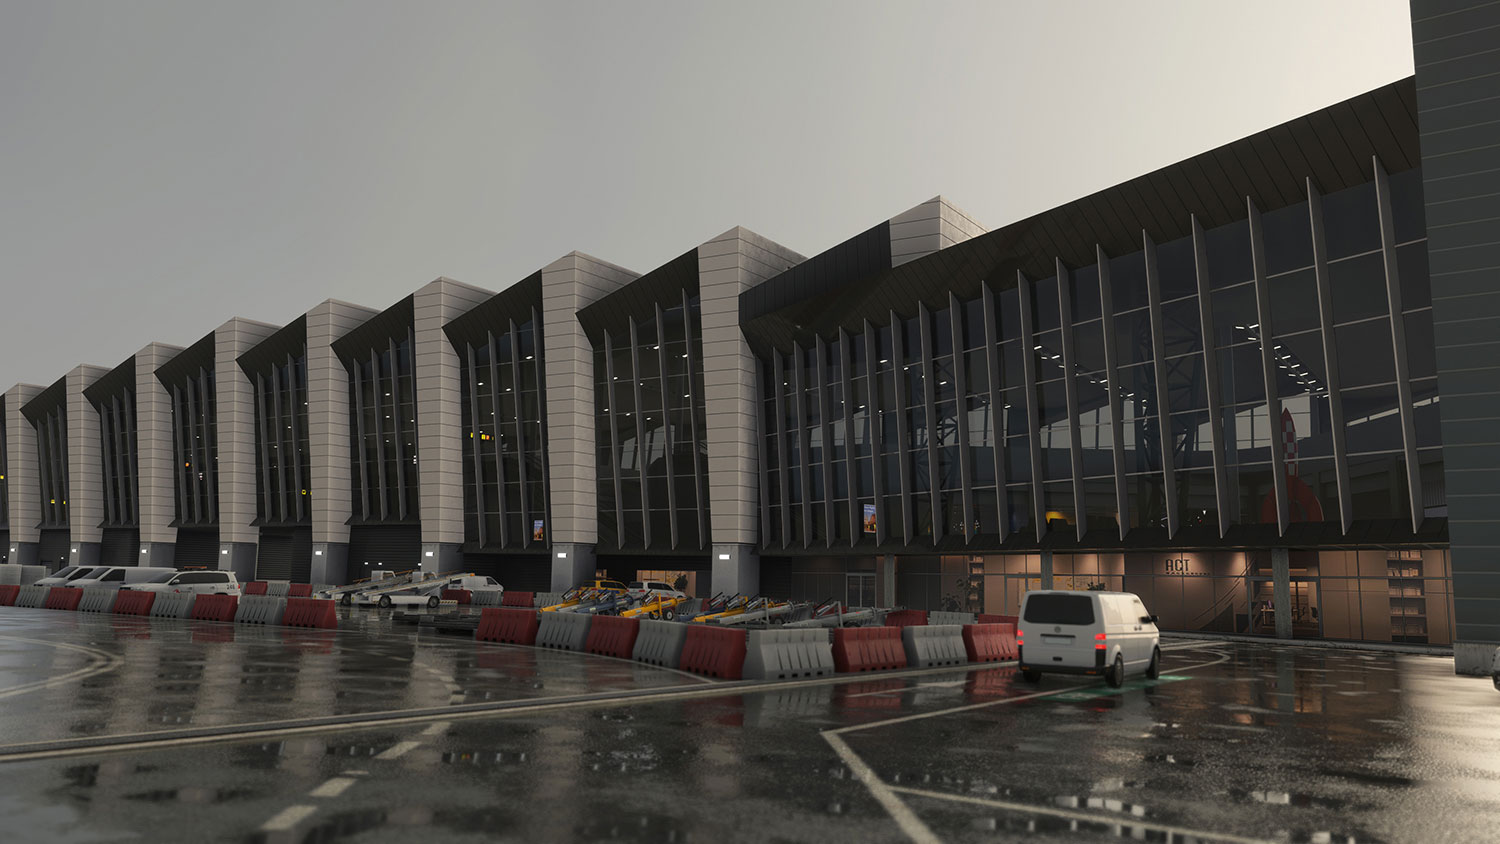 Aerosoft Mega Airport Brüssel